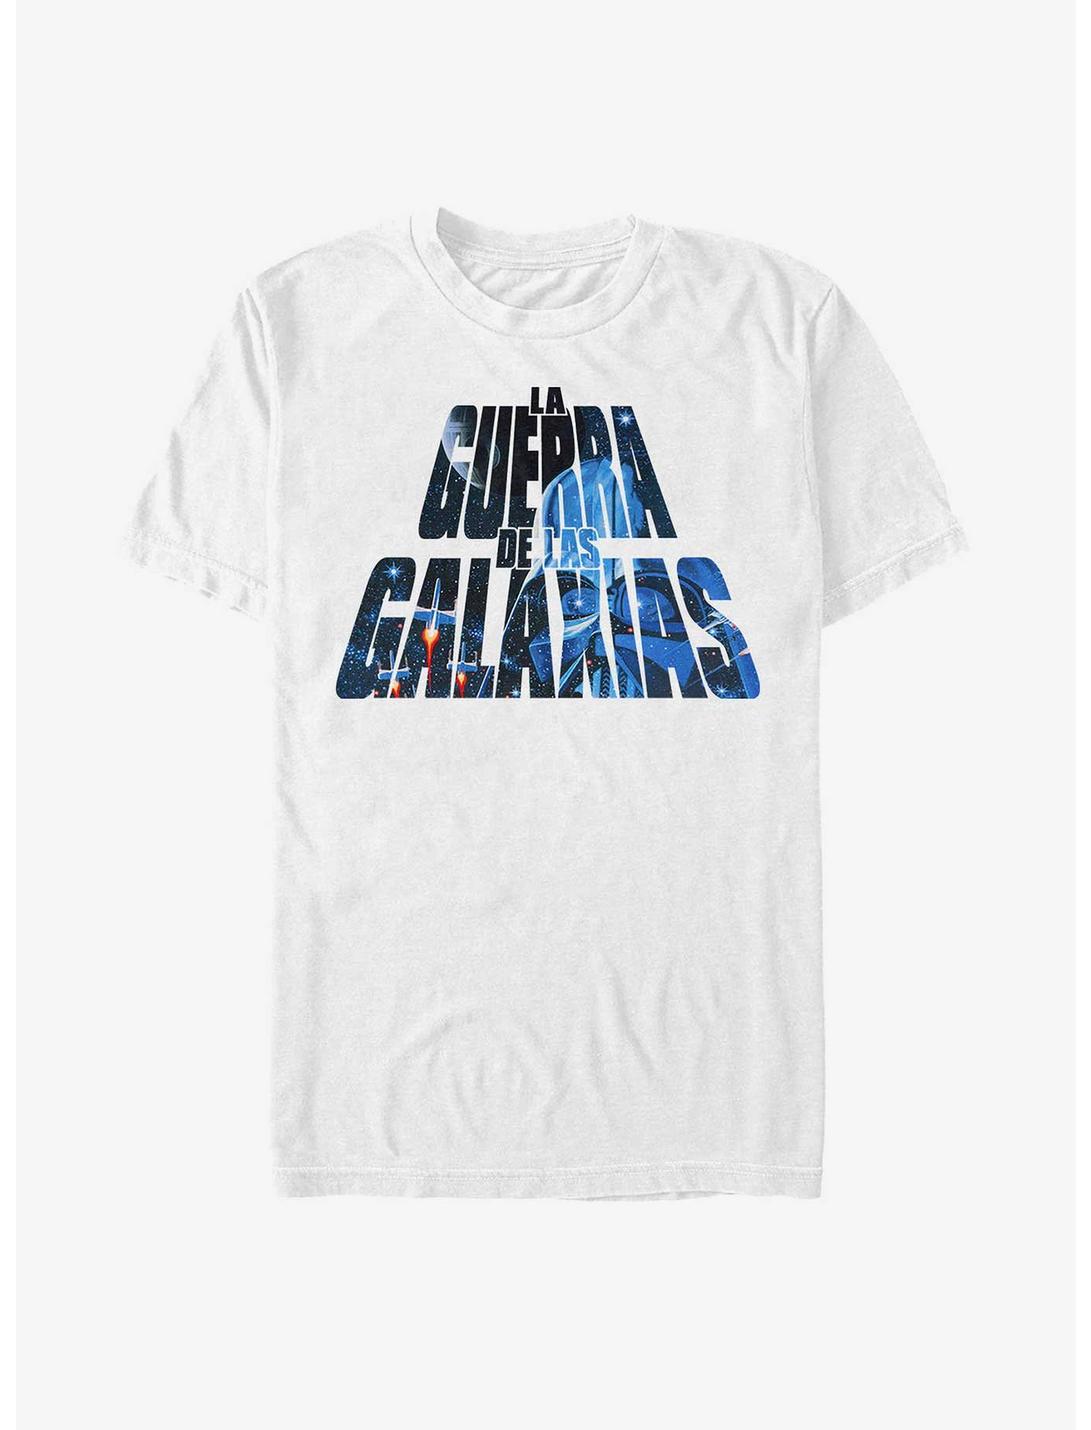 Plus Size Star Wars Las Galaxias T-Shirt, WHITE, hi-res